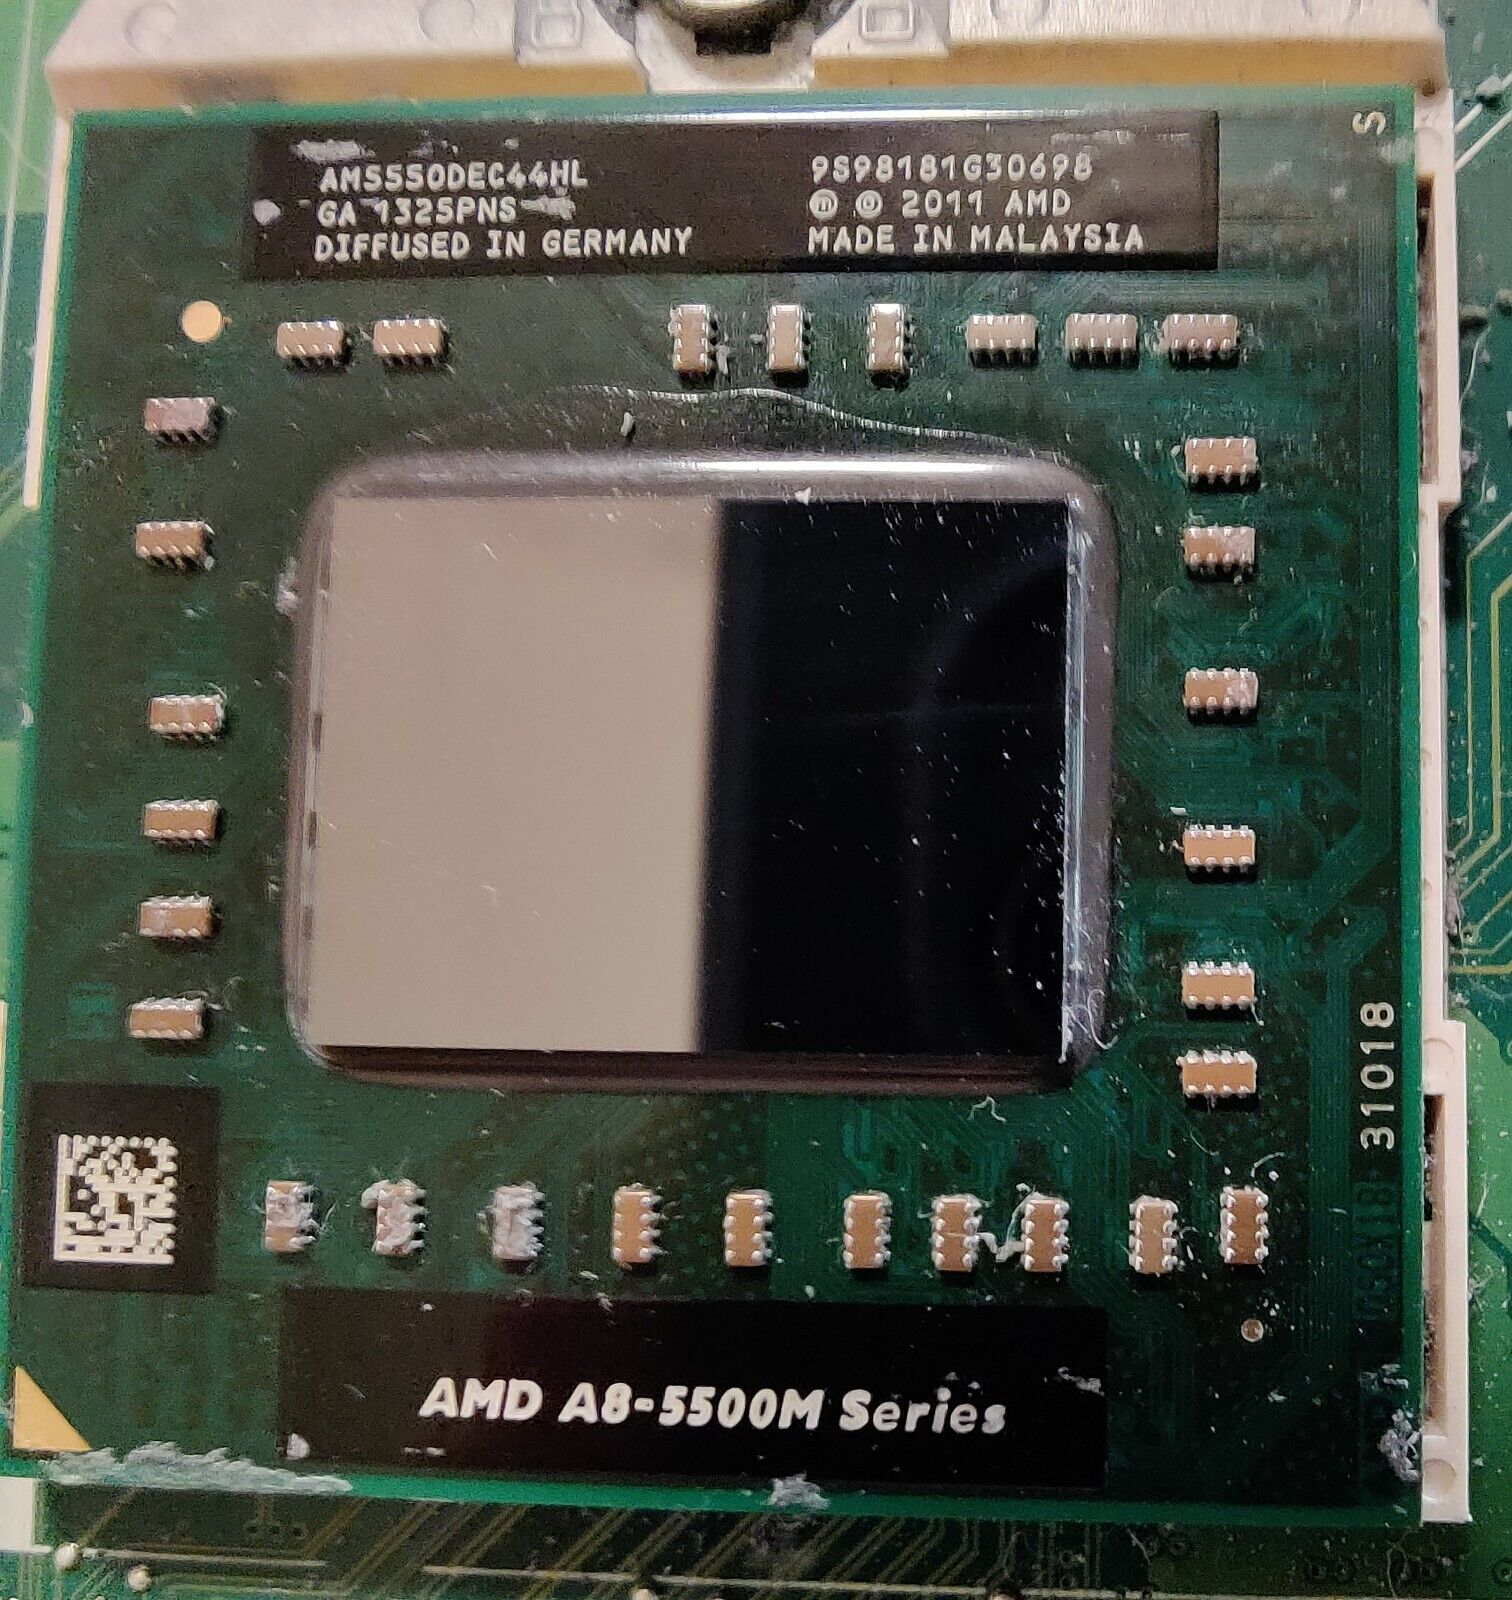 AMD A8-Series A8-5500M 2100 MHz AM5550DEC44HJ Mobile Laptop CPU Processor